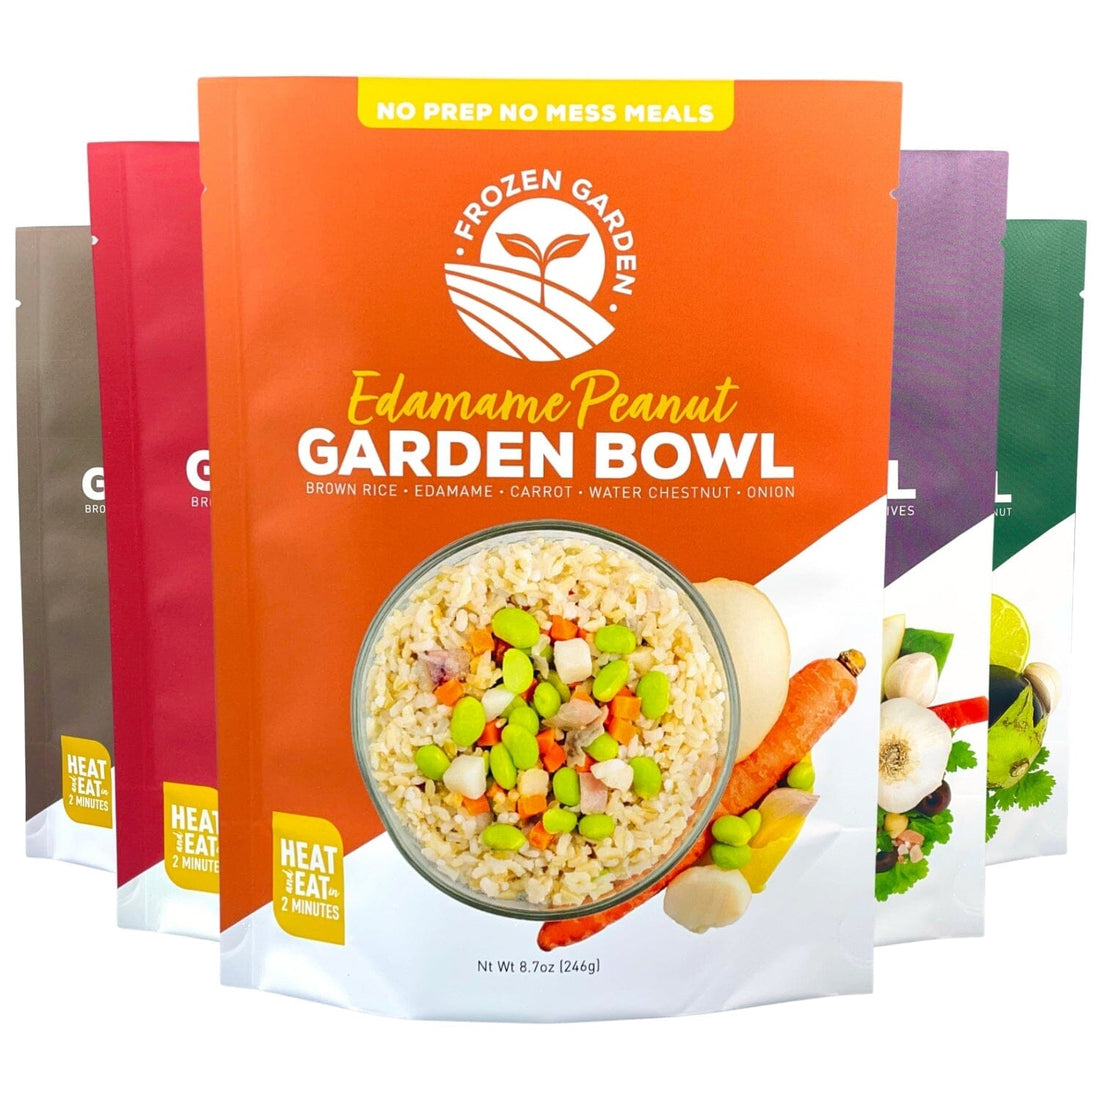 Garden Bowl Variety Pack (10 Pack) SoHookd Frozen Garden